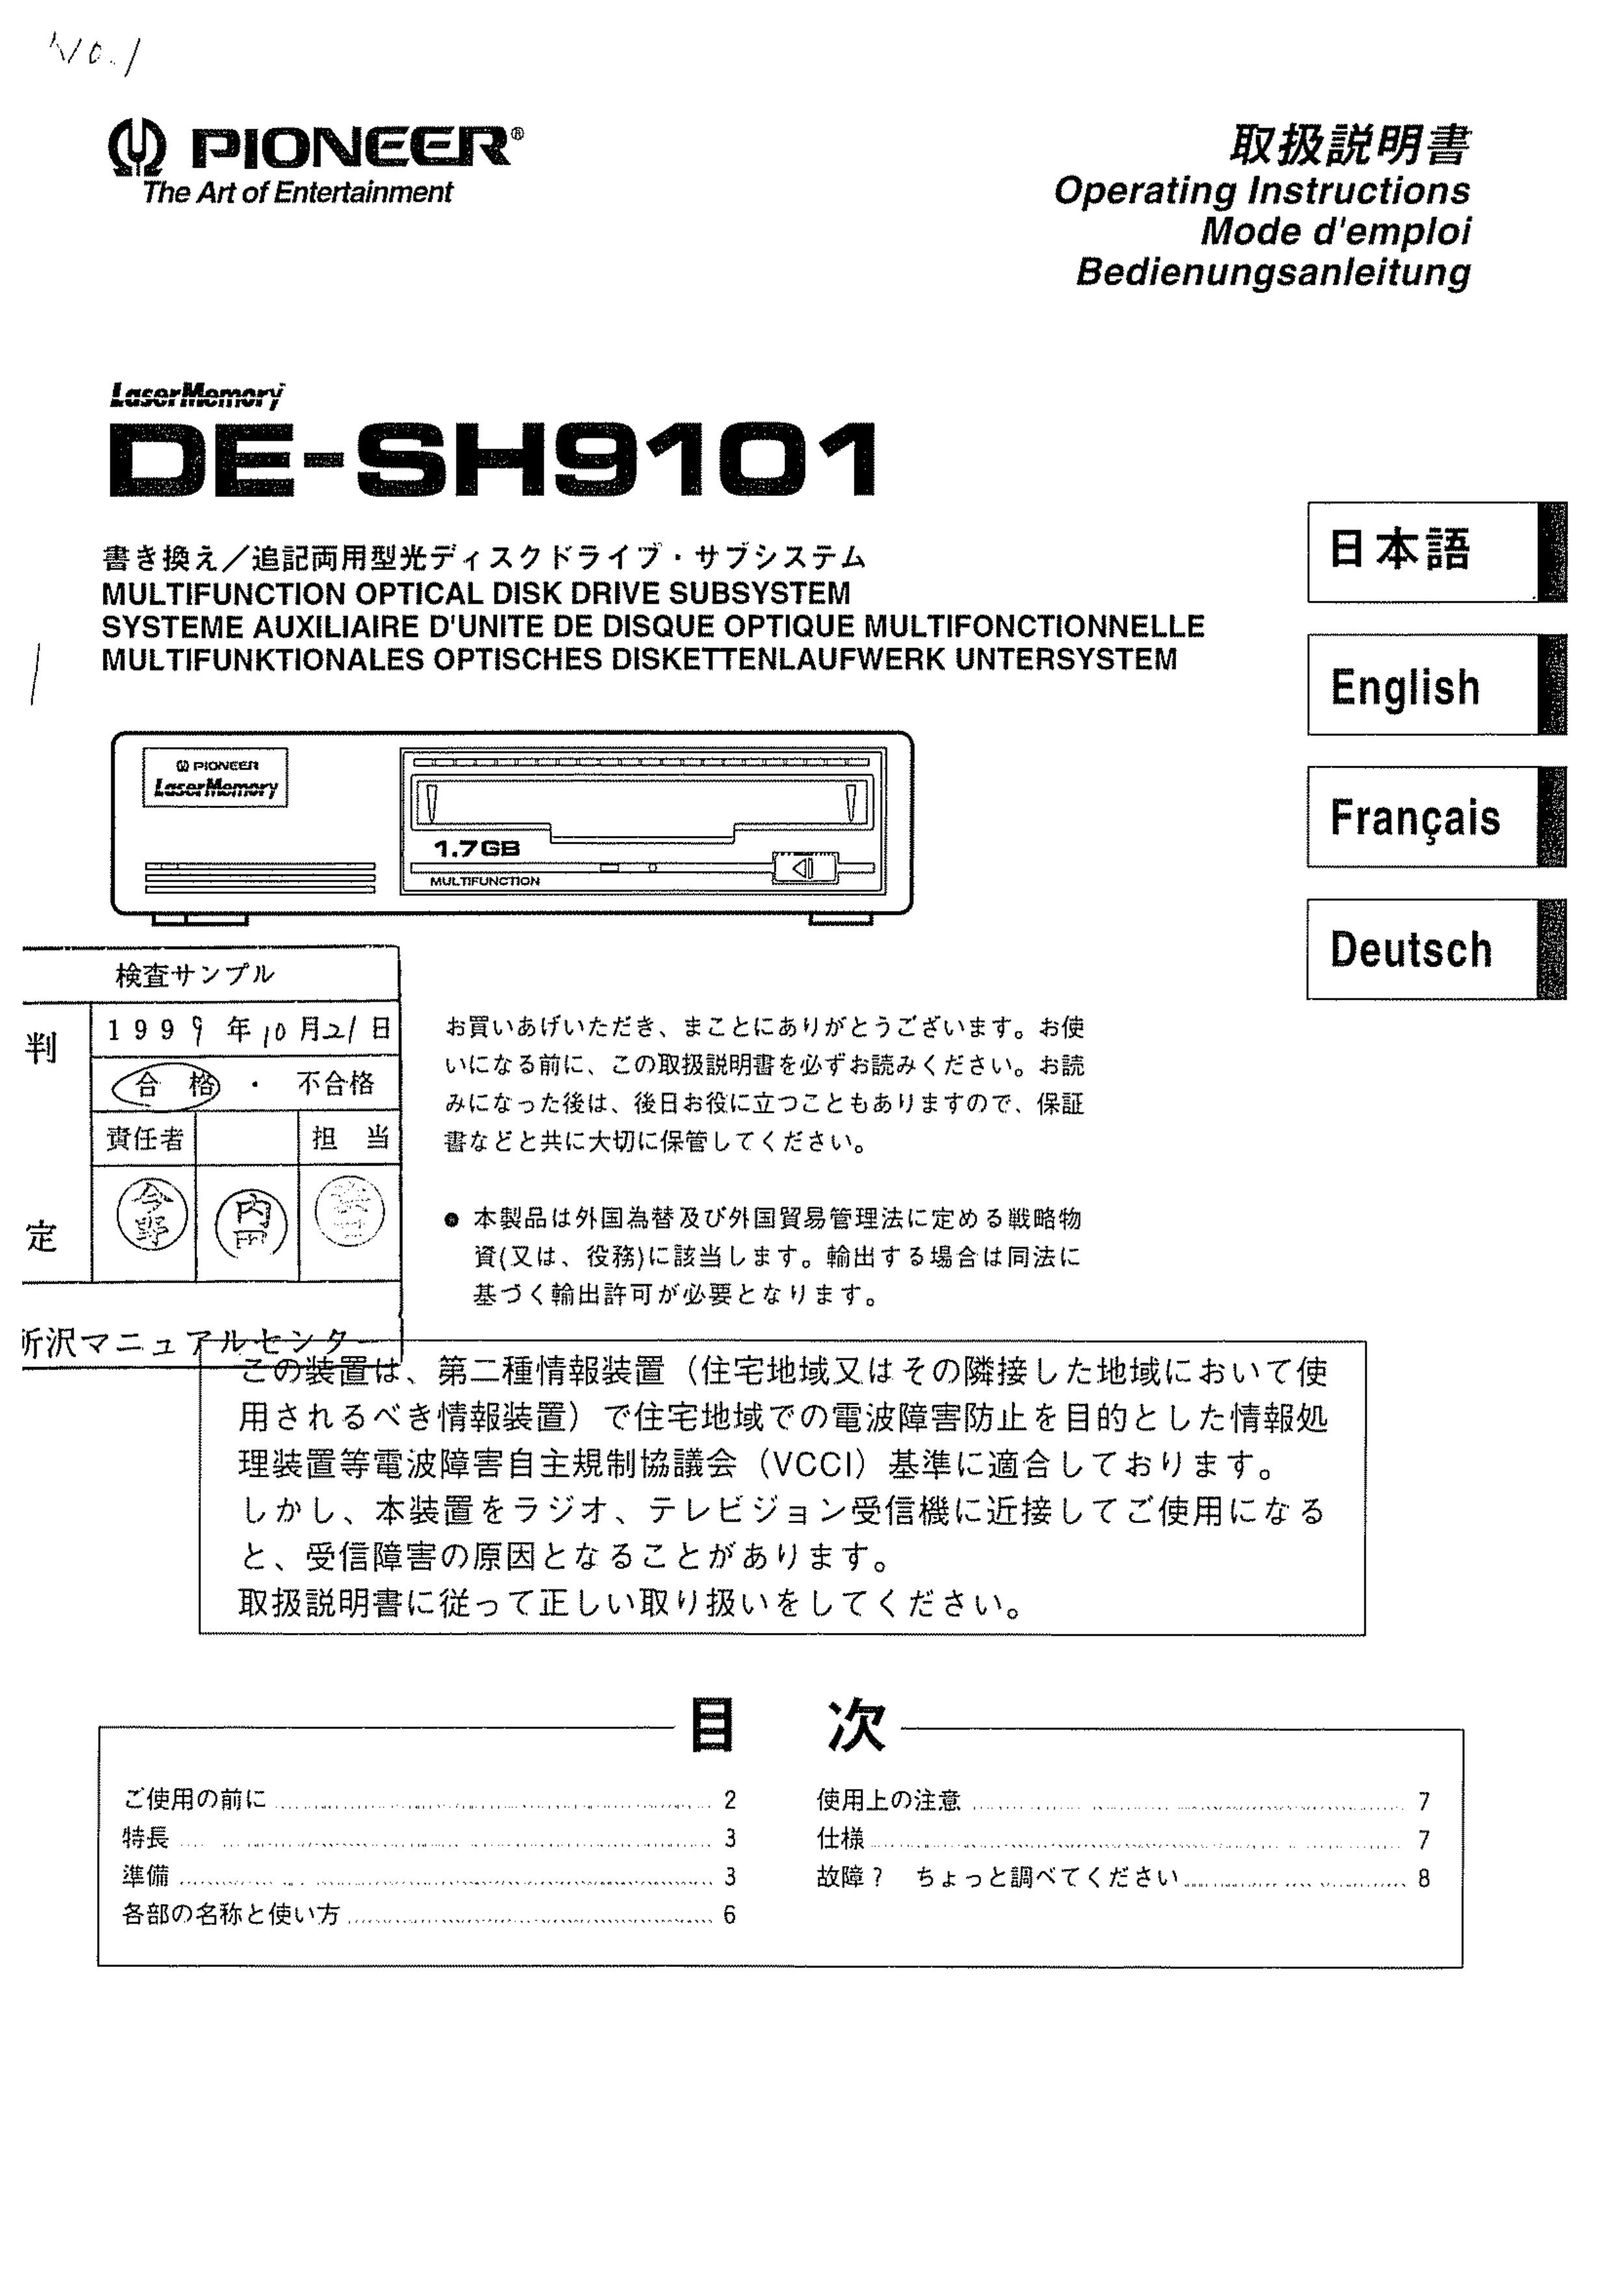 Pioneer DE-SH9101 Computer Drive User Manual